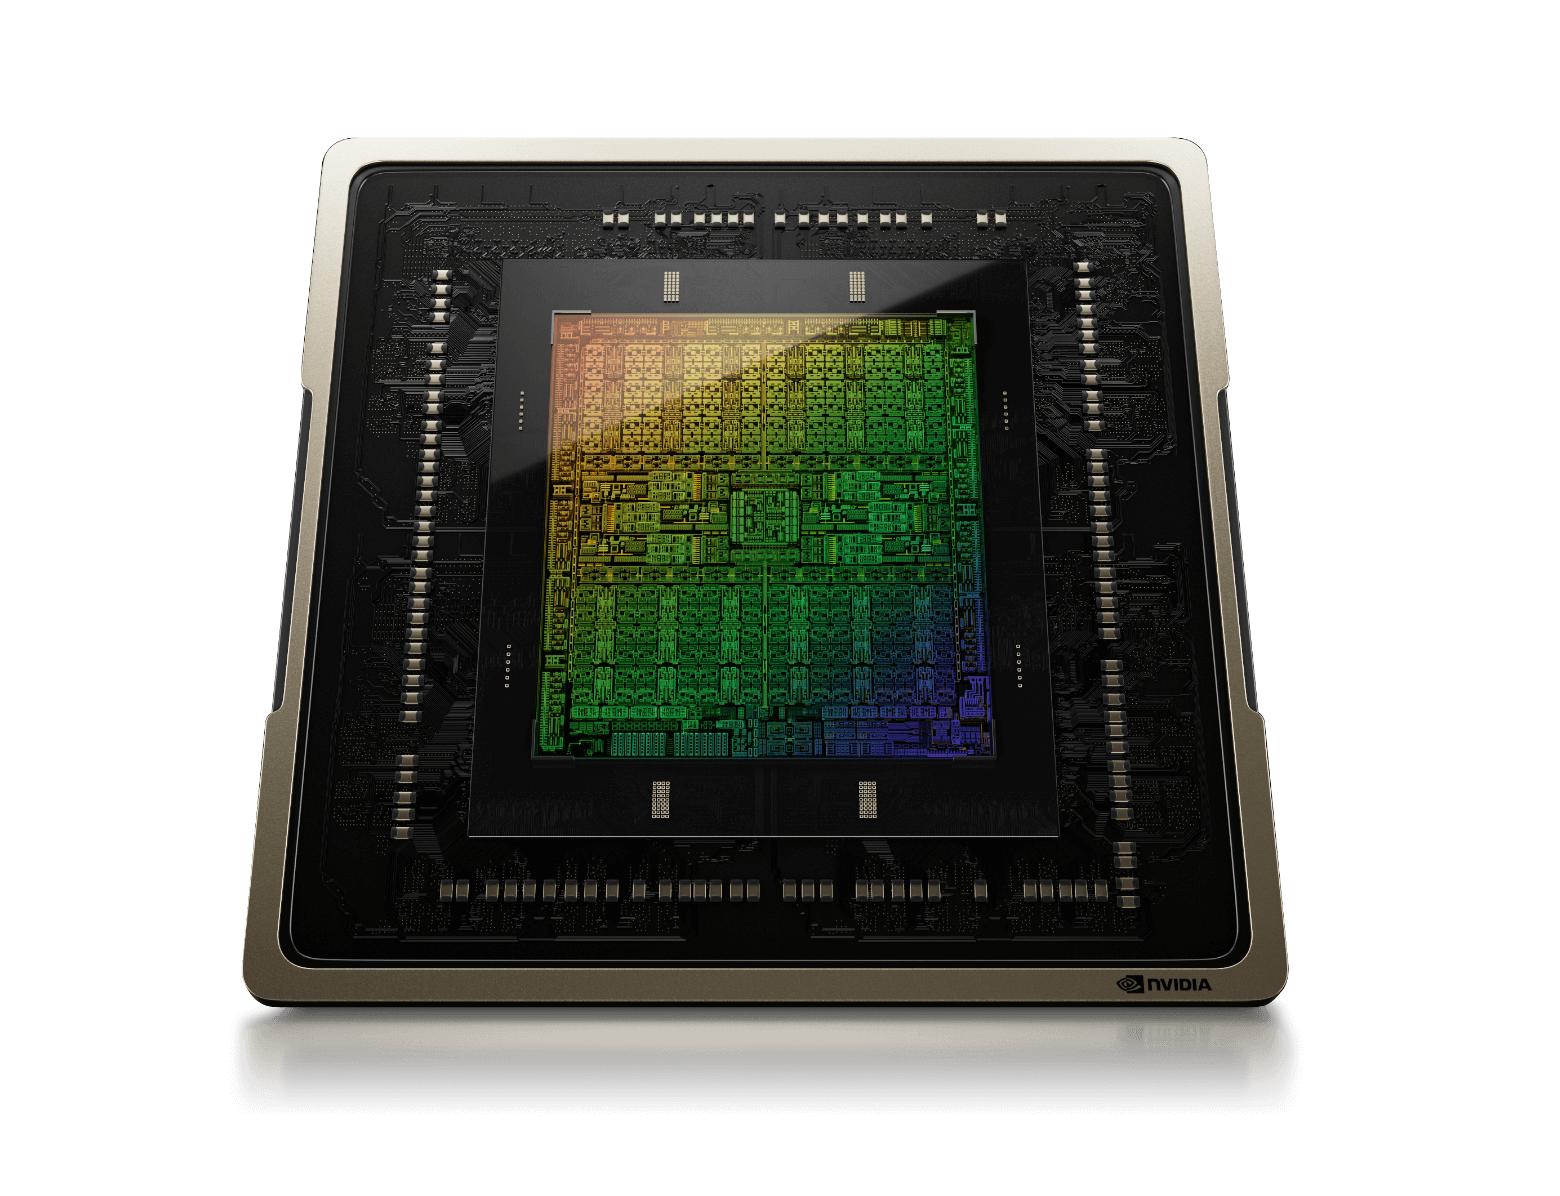 ASUS introduces GeForce RTX 4090/4080 ROG STRIX and TUF GPUs 